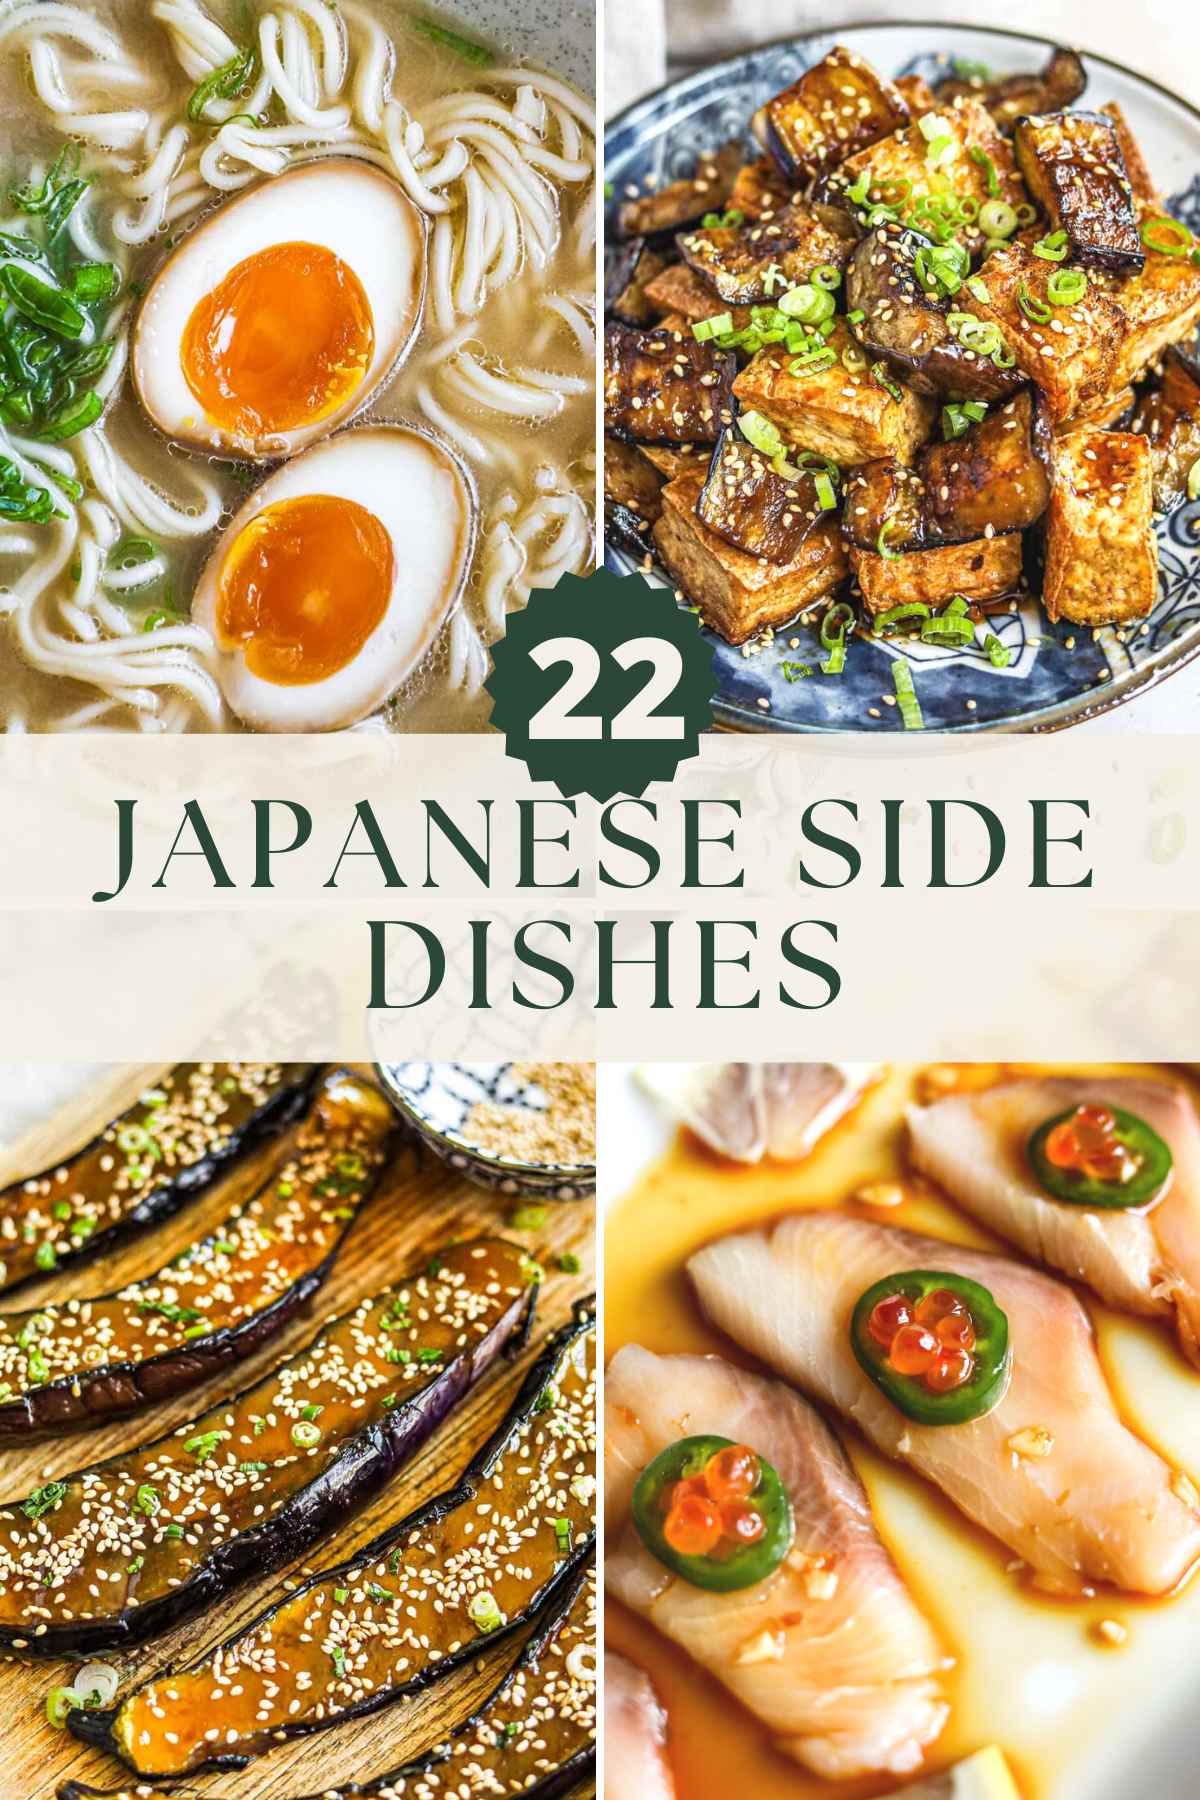 22 Japanese side dishes, including miso eggplant, ajitama ramen egg, teriyaki tofu eggplant, and hamachi crudo.